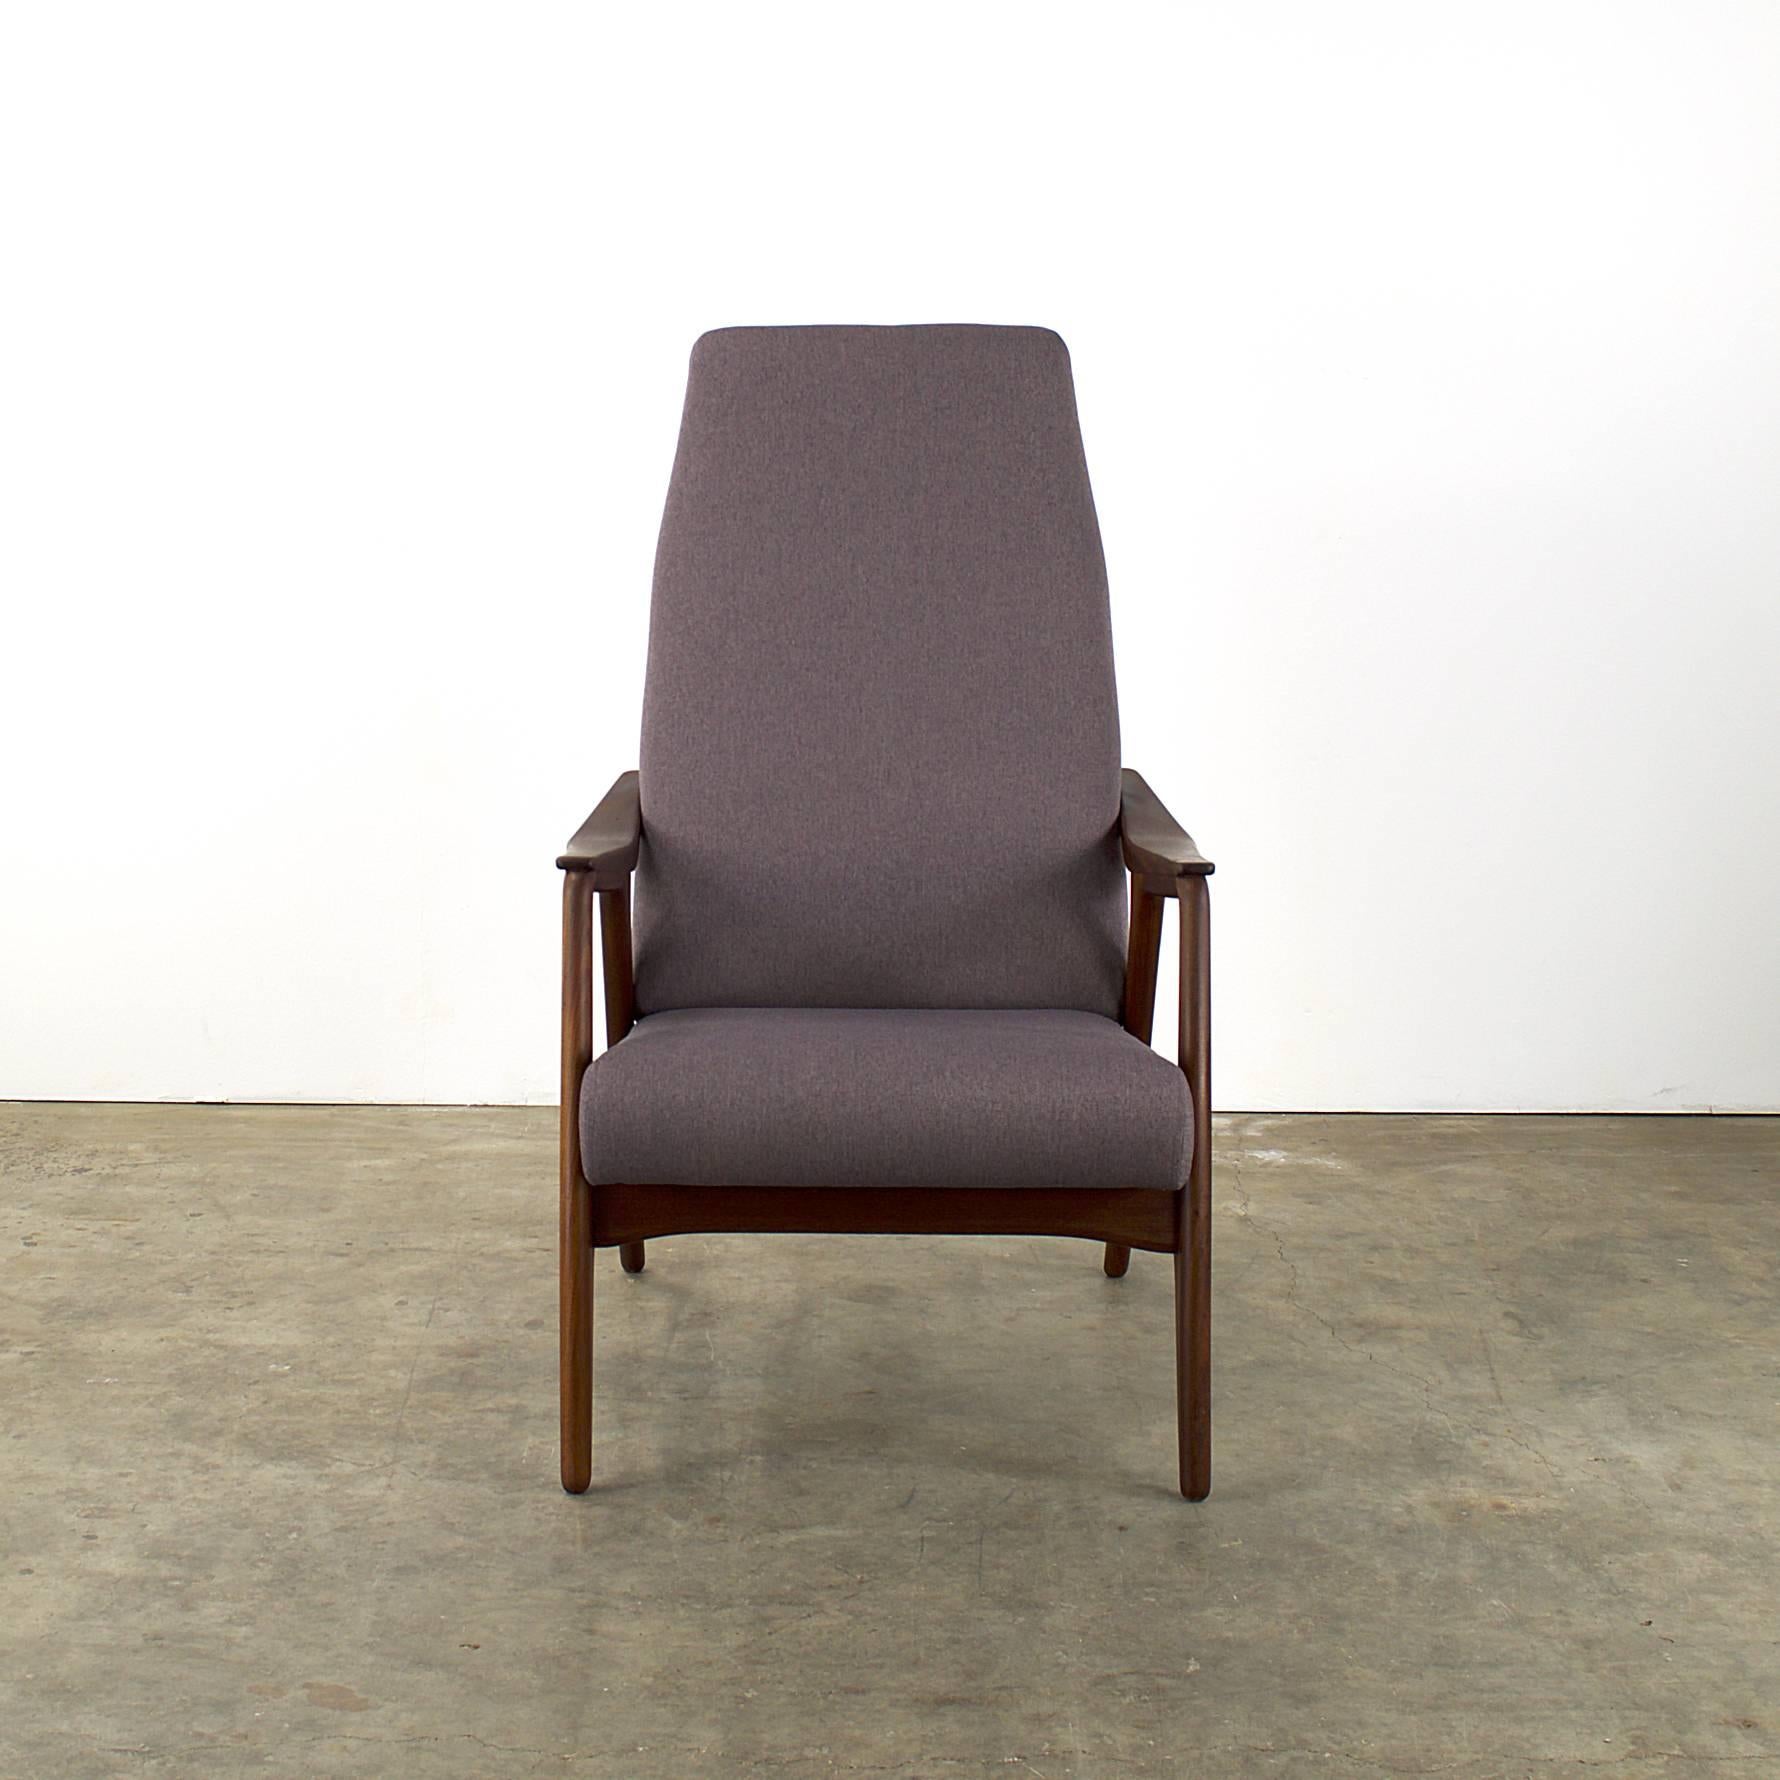 Midcentury teak easy chair / fauteuil reupholstered. Scandinavian design wit beautiful Lima purple rain fabric. Very good condition.